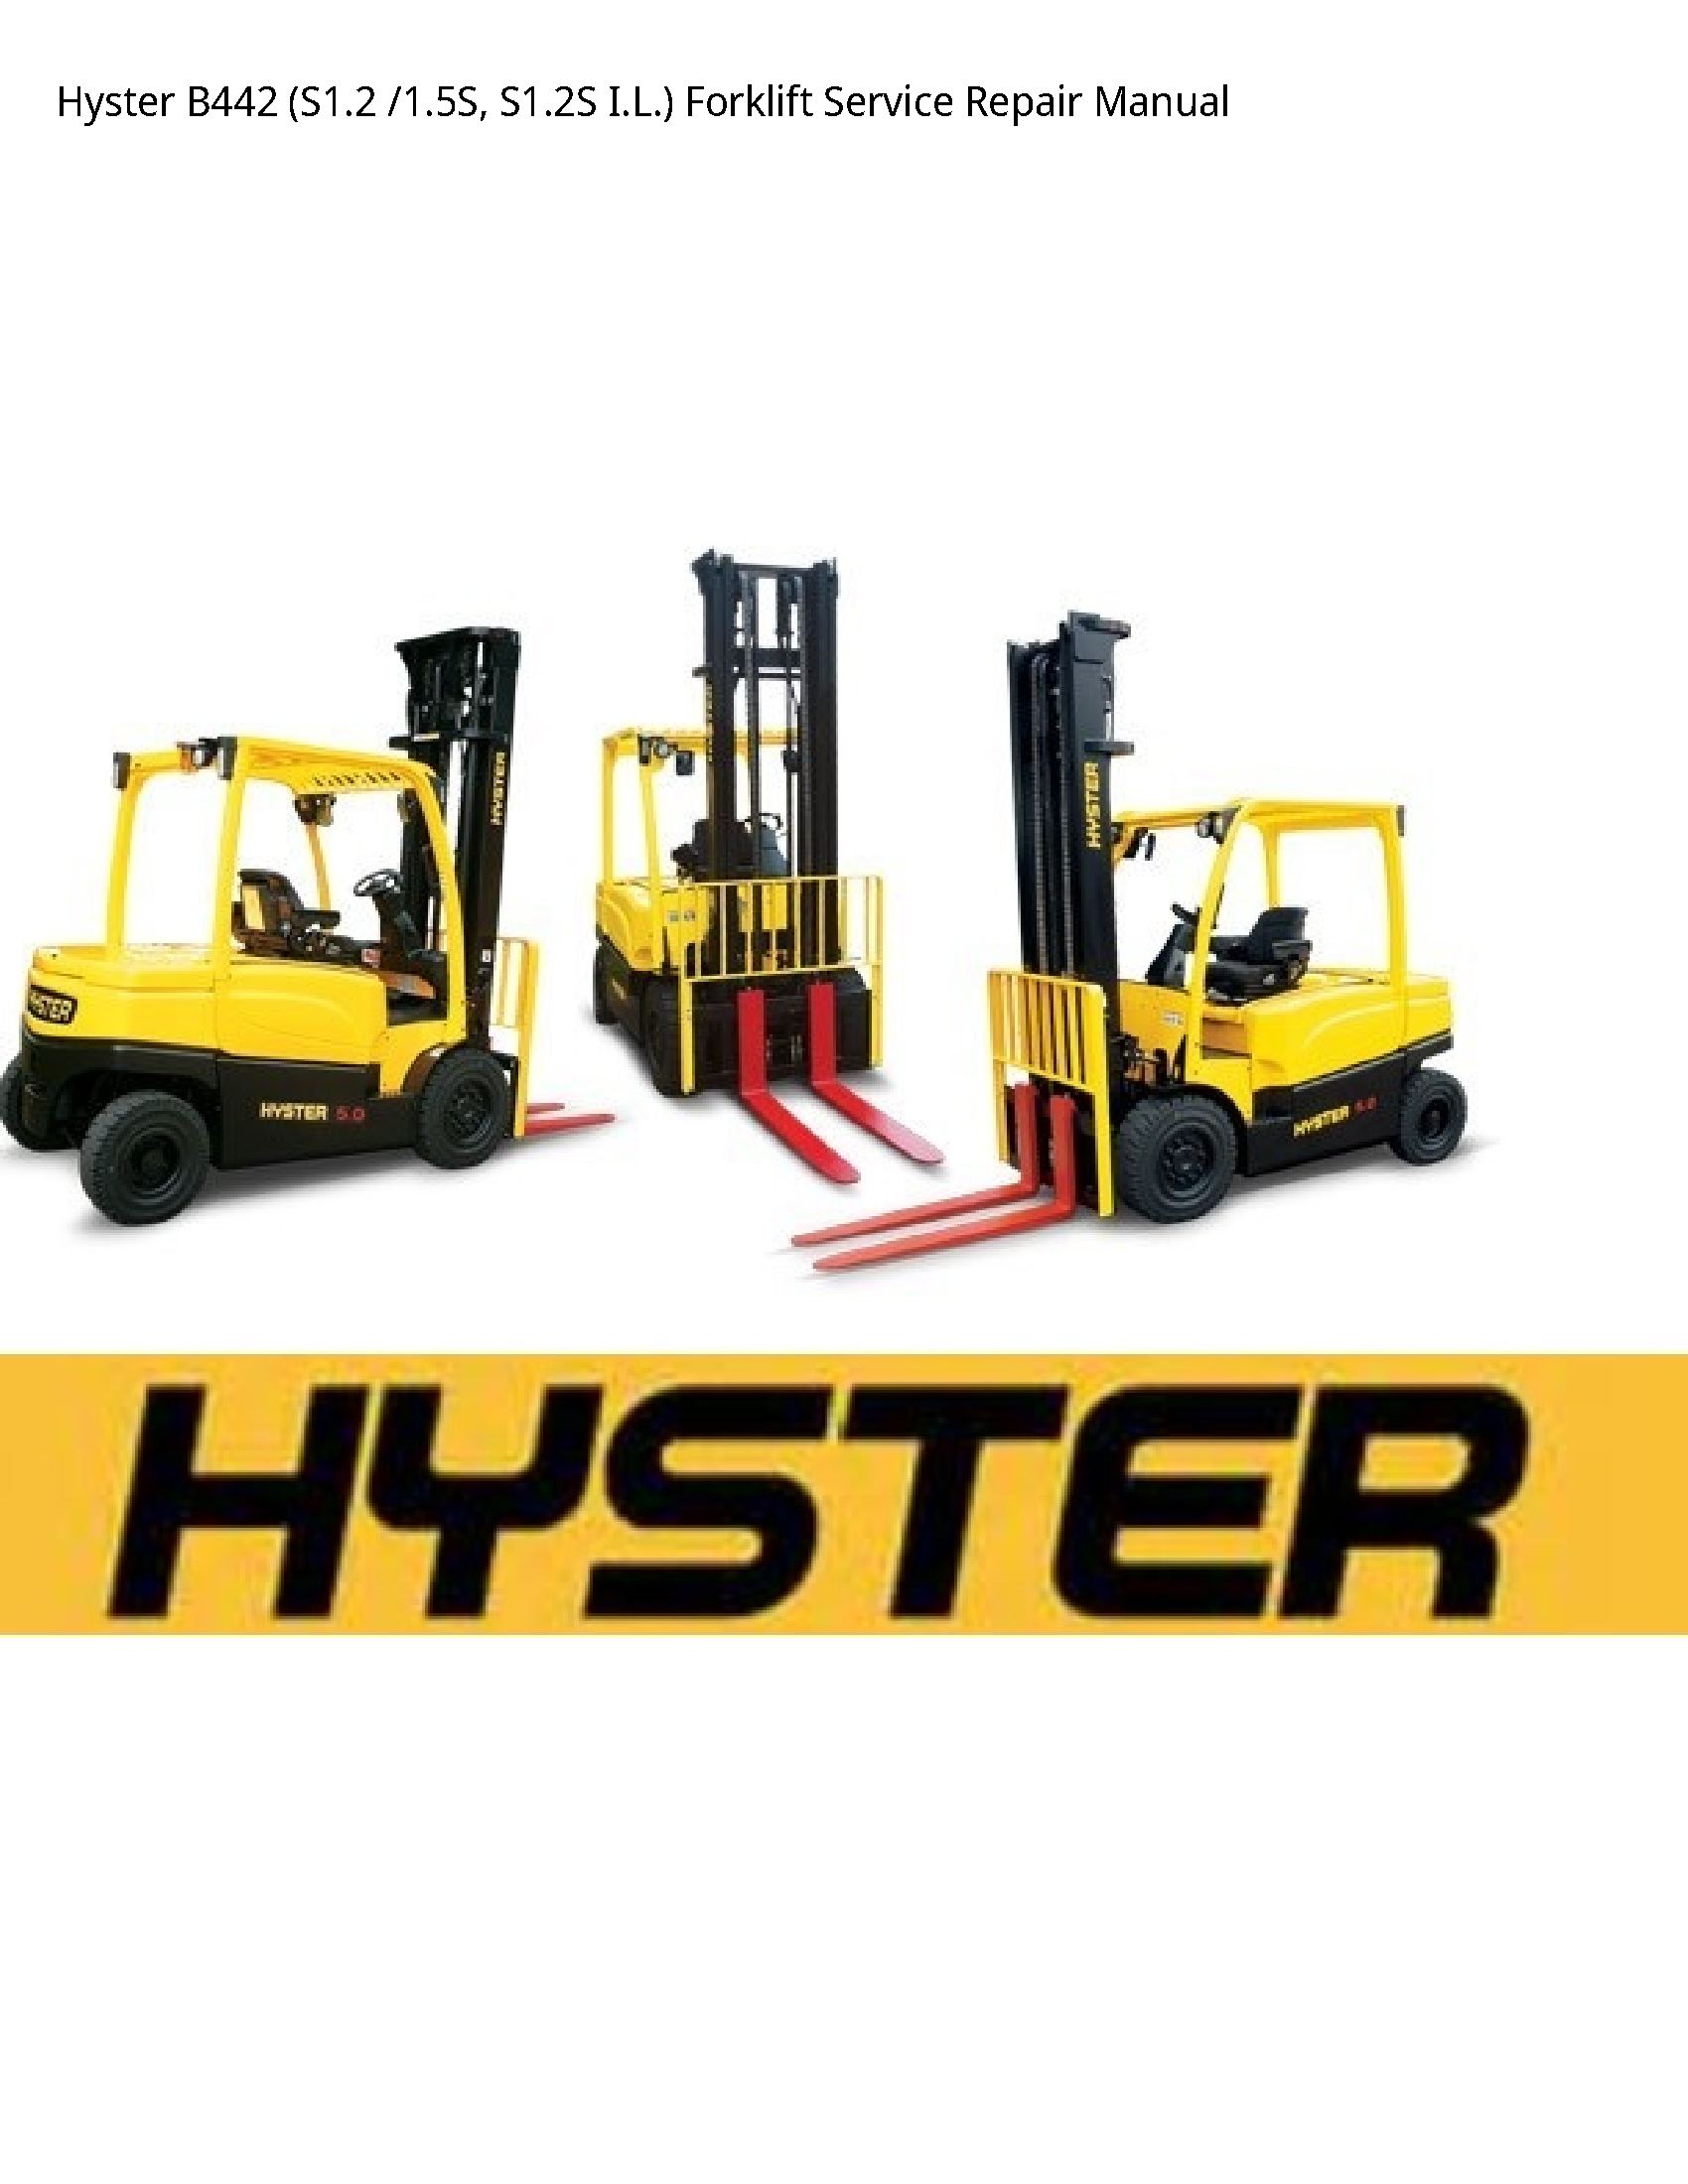 Hyster B442 I.L.) Forklift manual